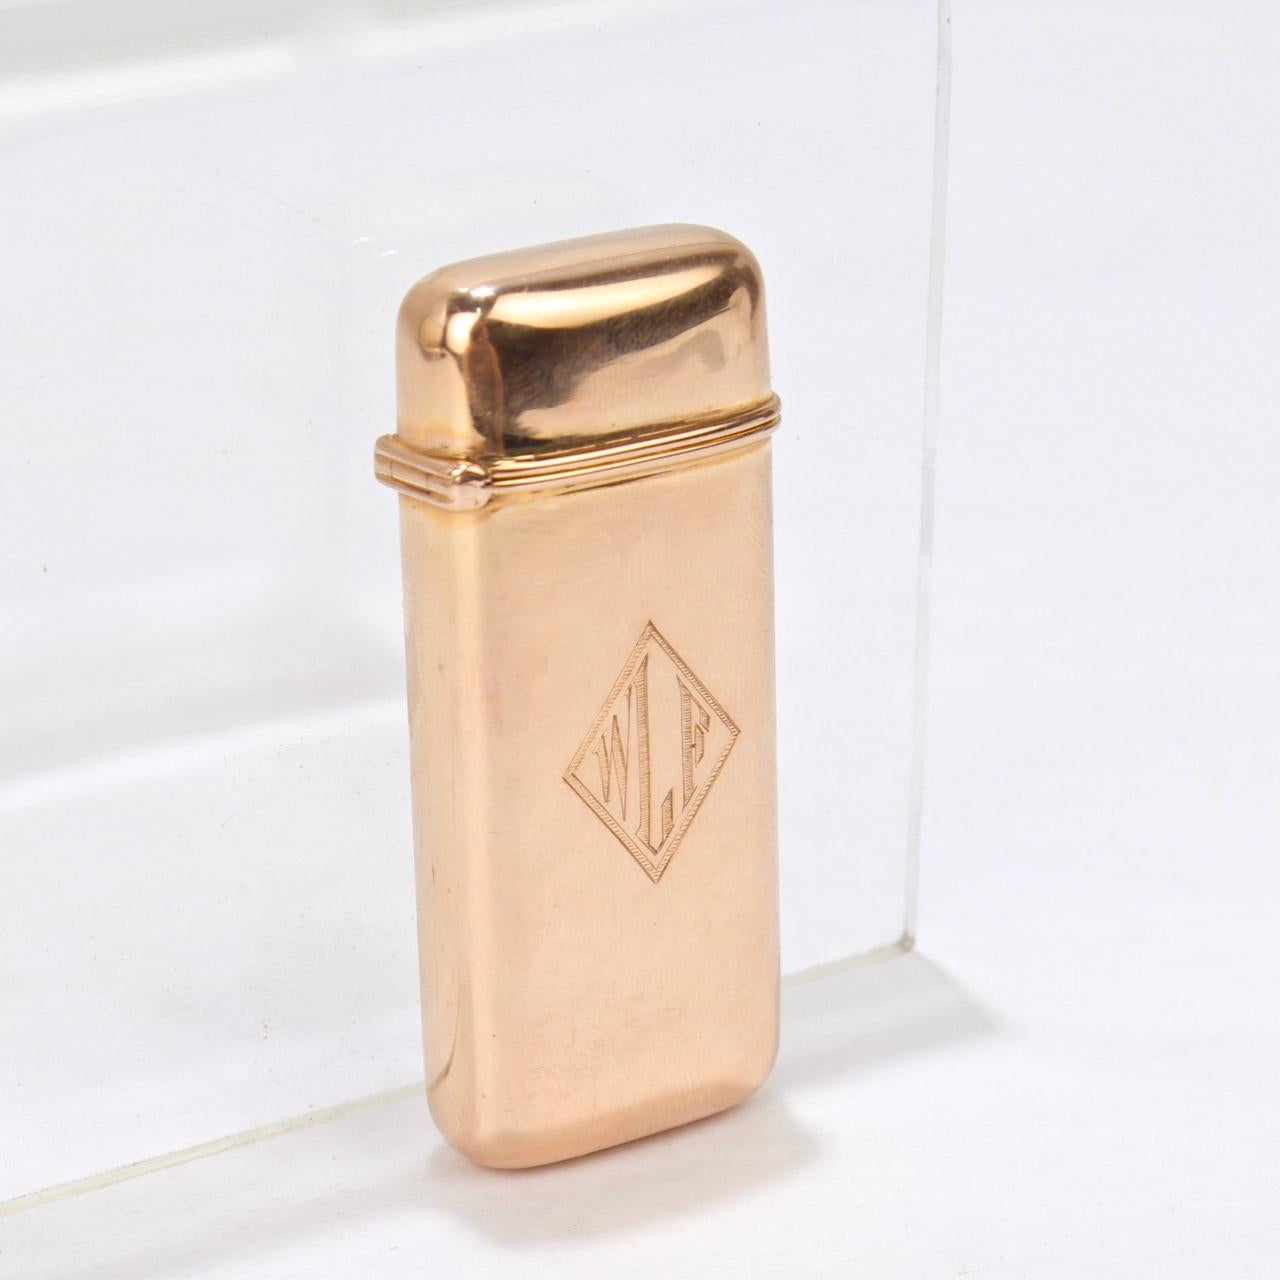 Art Deco 14 Karat Gold Smoking Set with Cigarette Case, Card Case and Match Safe 1